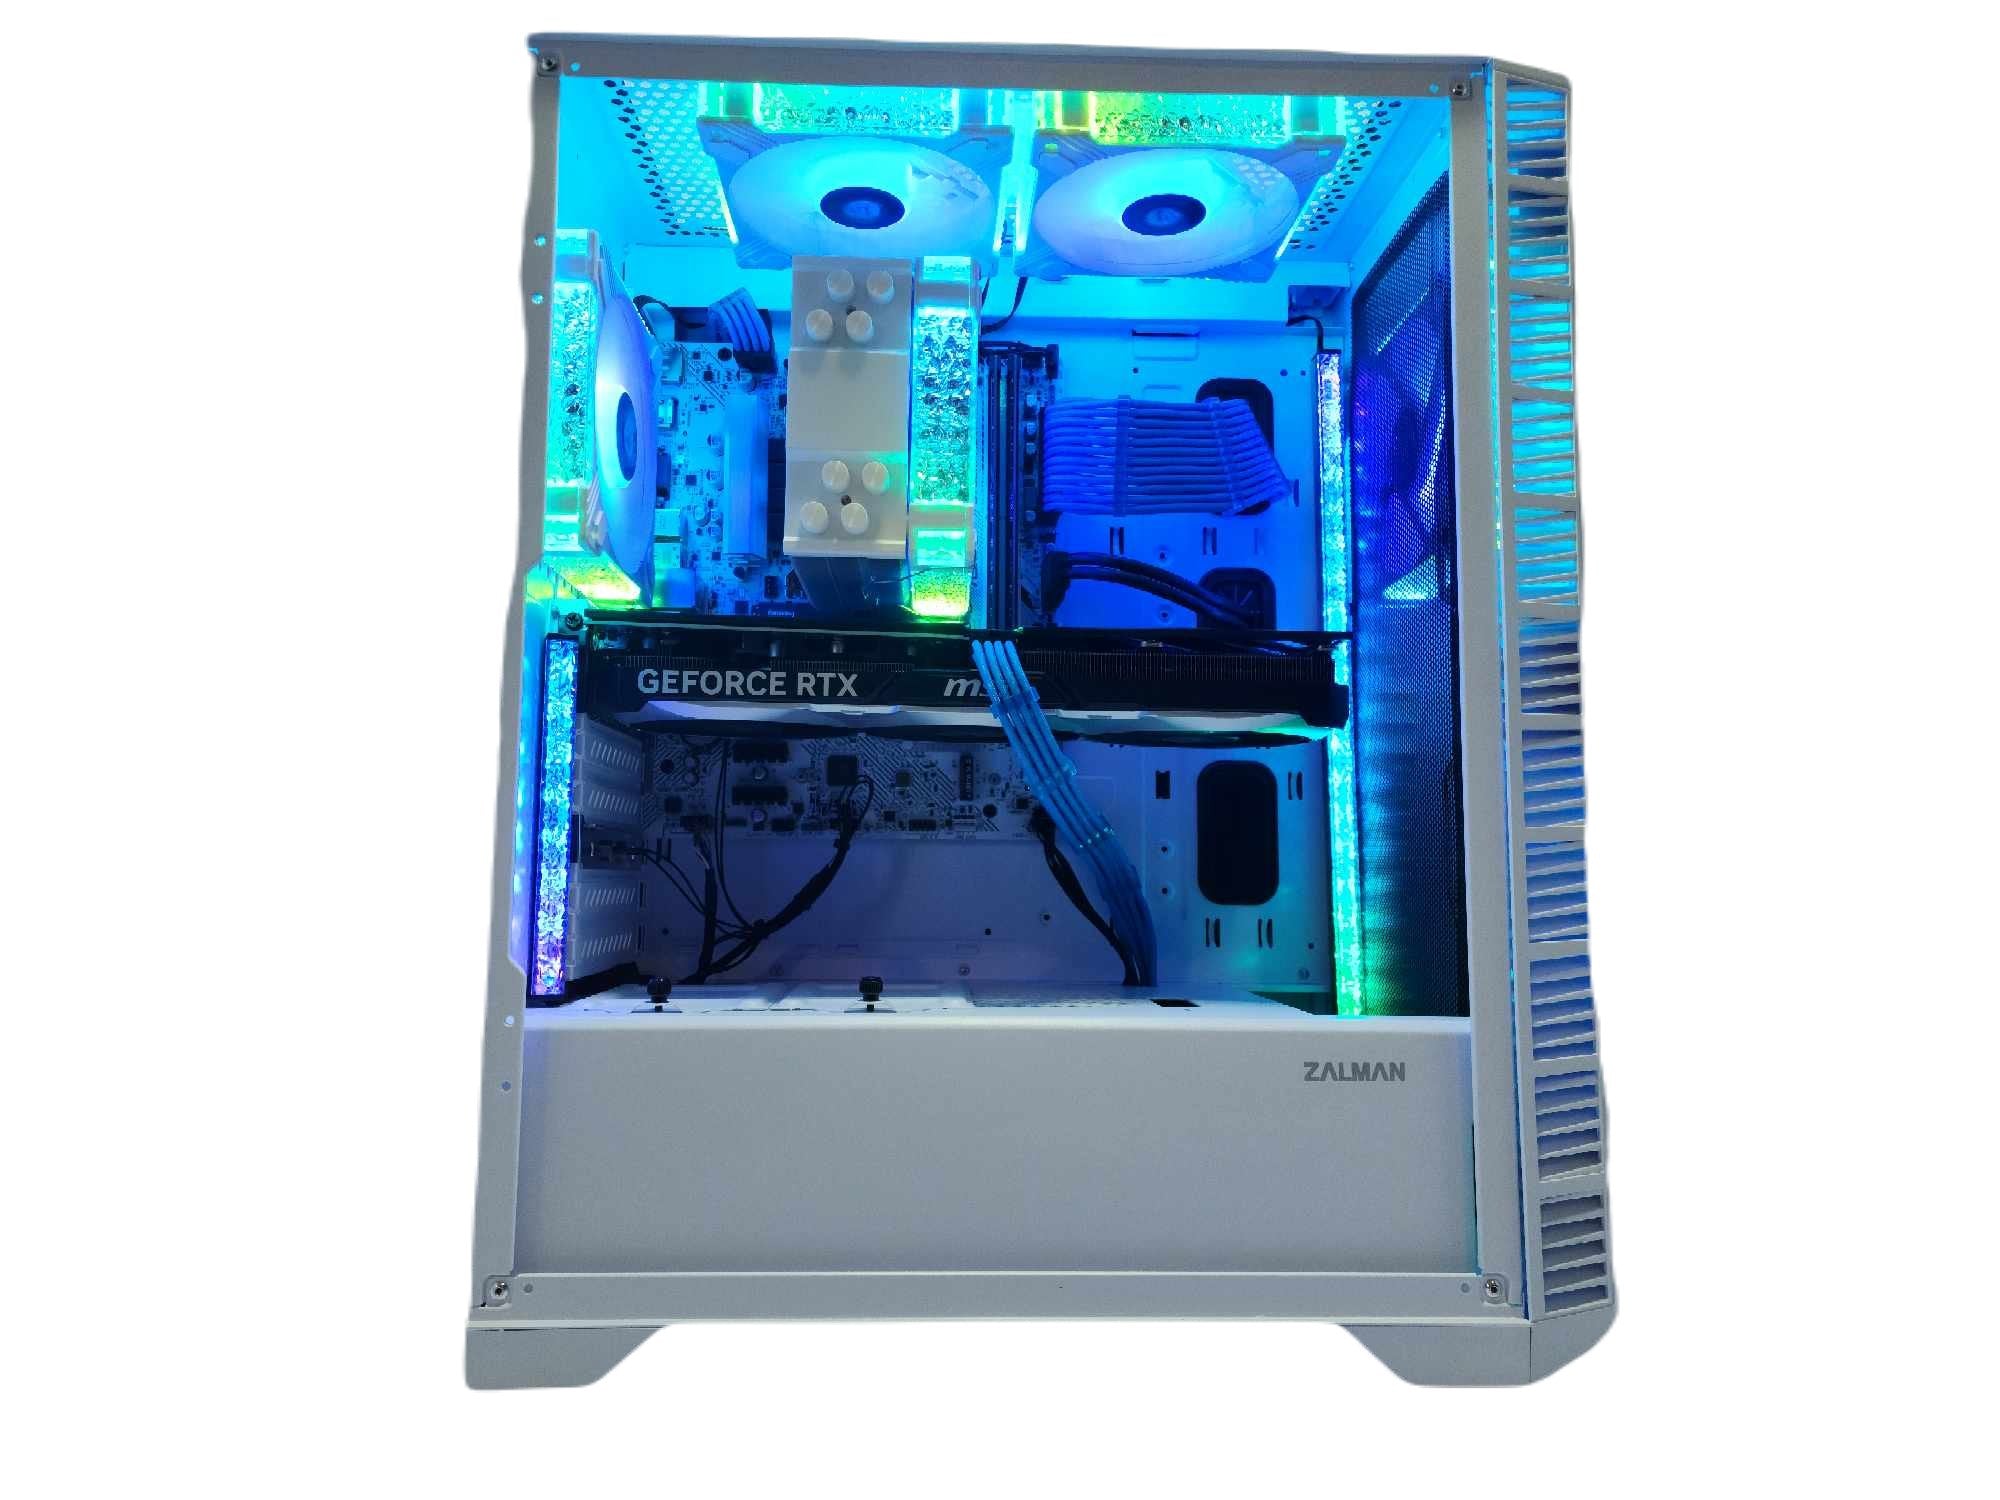 Iceworm Core XII Gaming PC Intel i7 NVIDIA RTX 4060 1TB SSD 16GB DDR5 White RGB B760 - Geek Tech